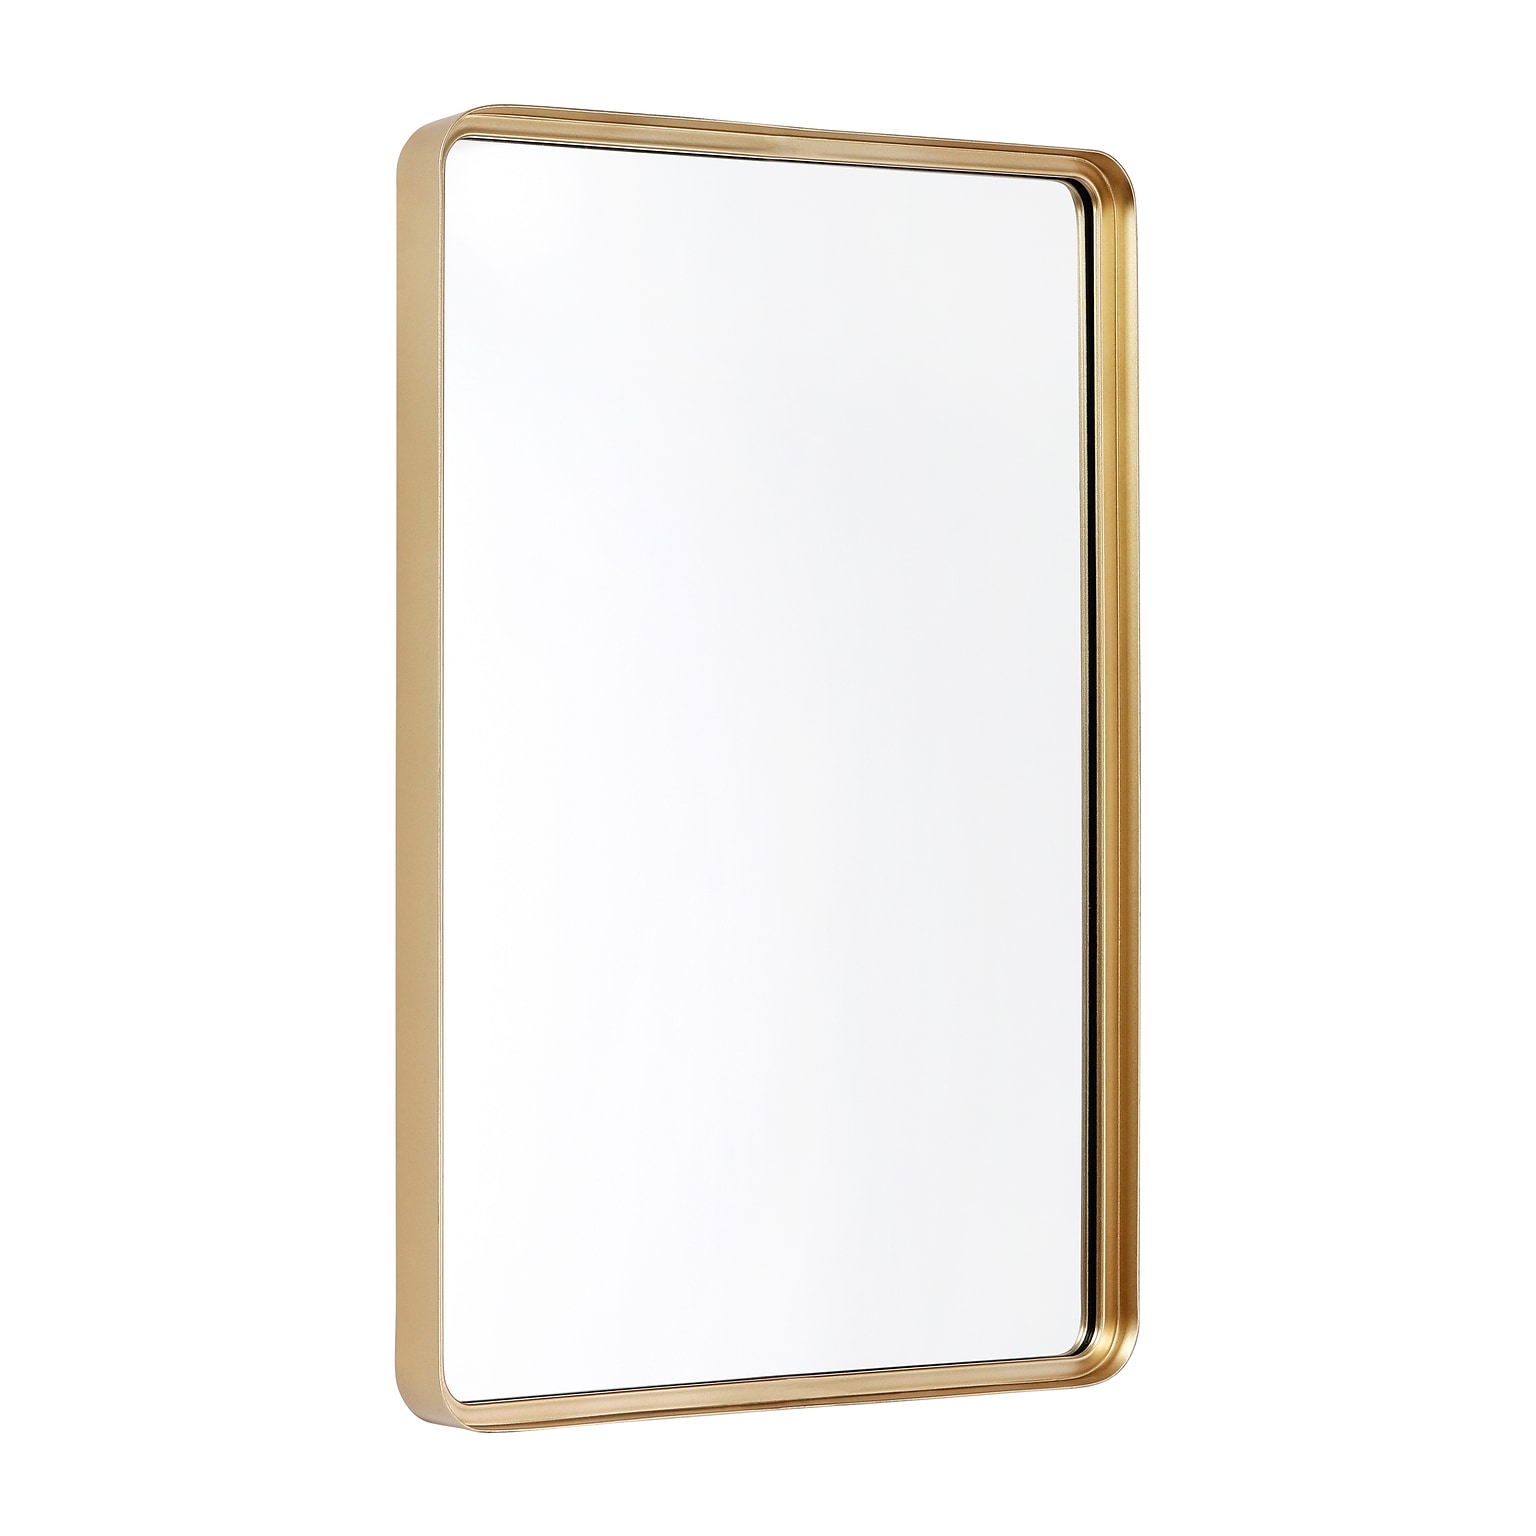 Flash Furniture Ava Deep Framed Wall Mirror, 24x 36 Gold (HMHD22M111YBGLD)